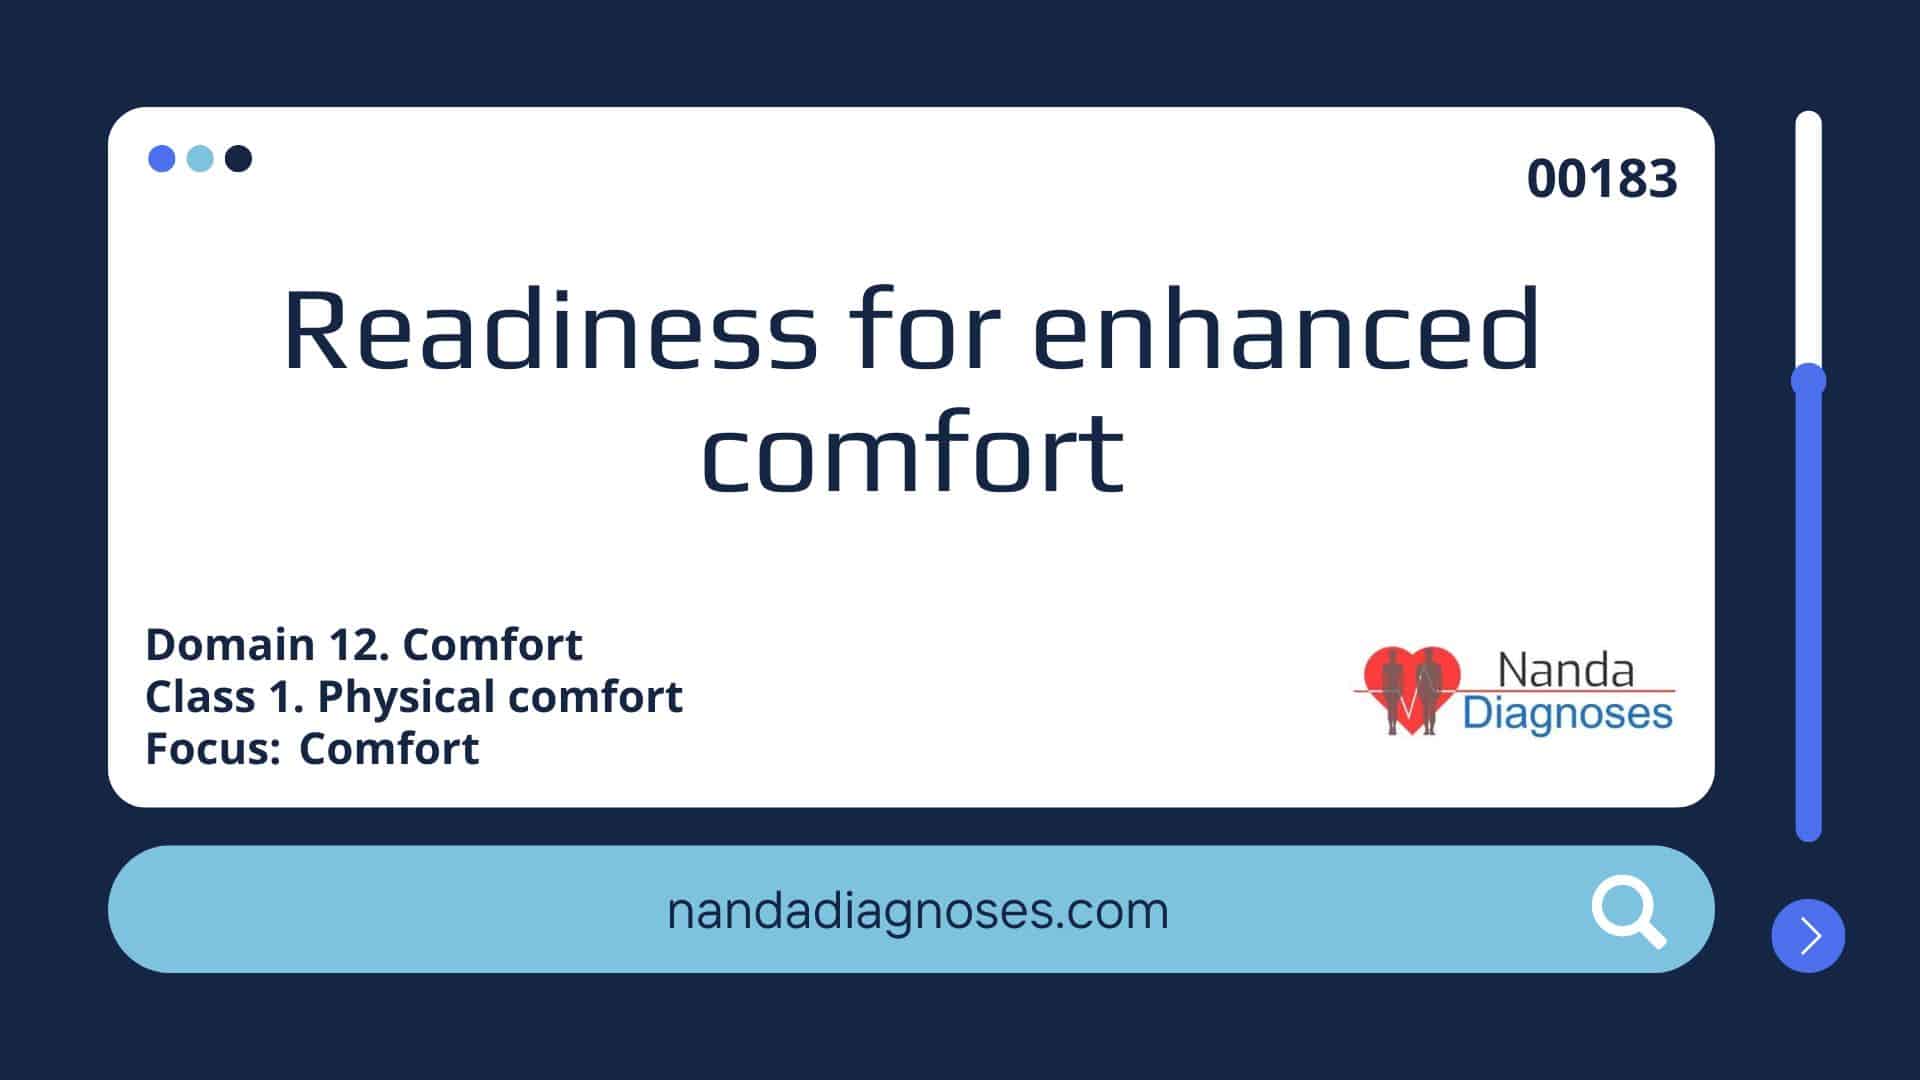 Nursing diagnosis Readiness for enhanced comfort